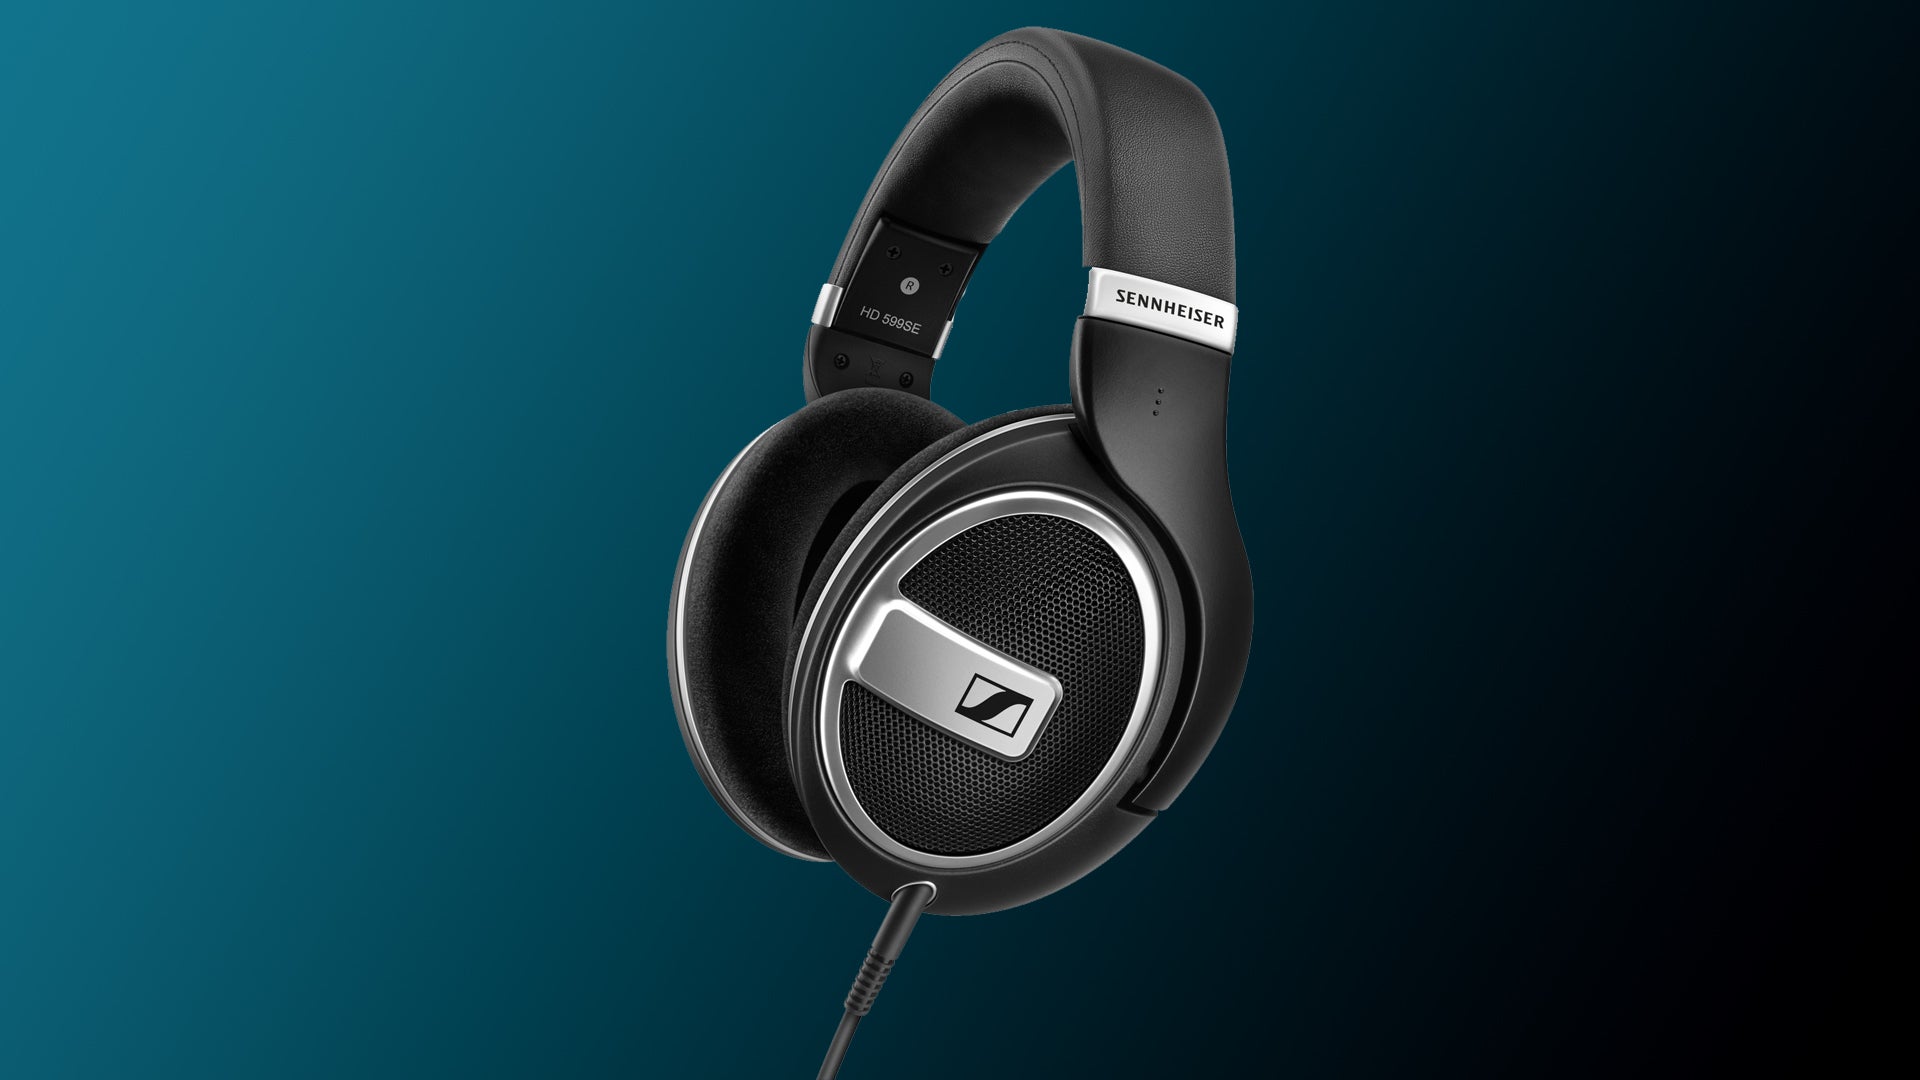 Image of Sennheiser HD 599 headphones on a blue to black gradient background